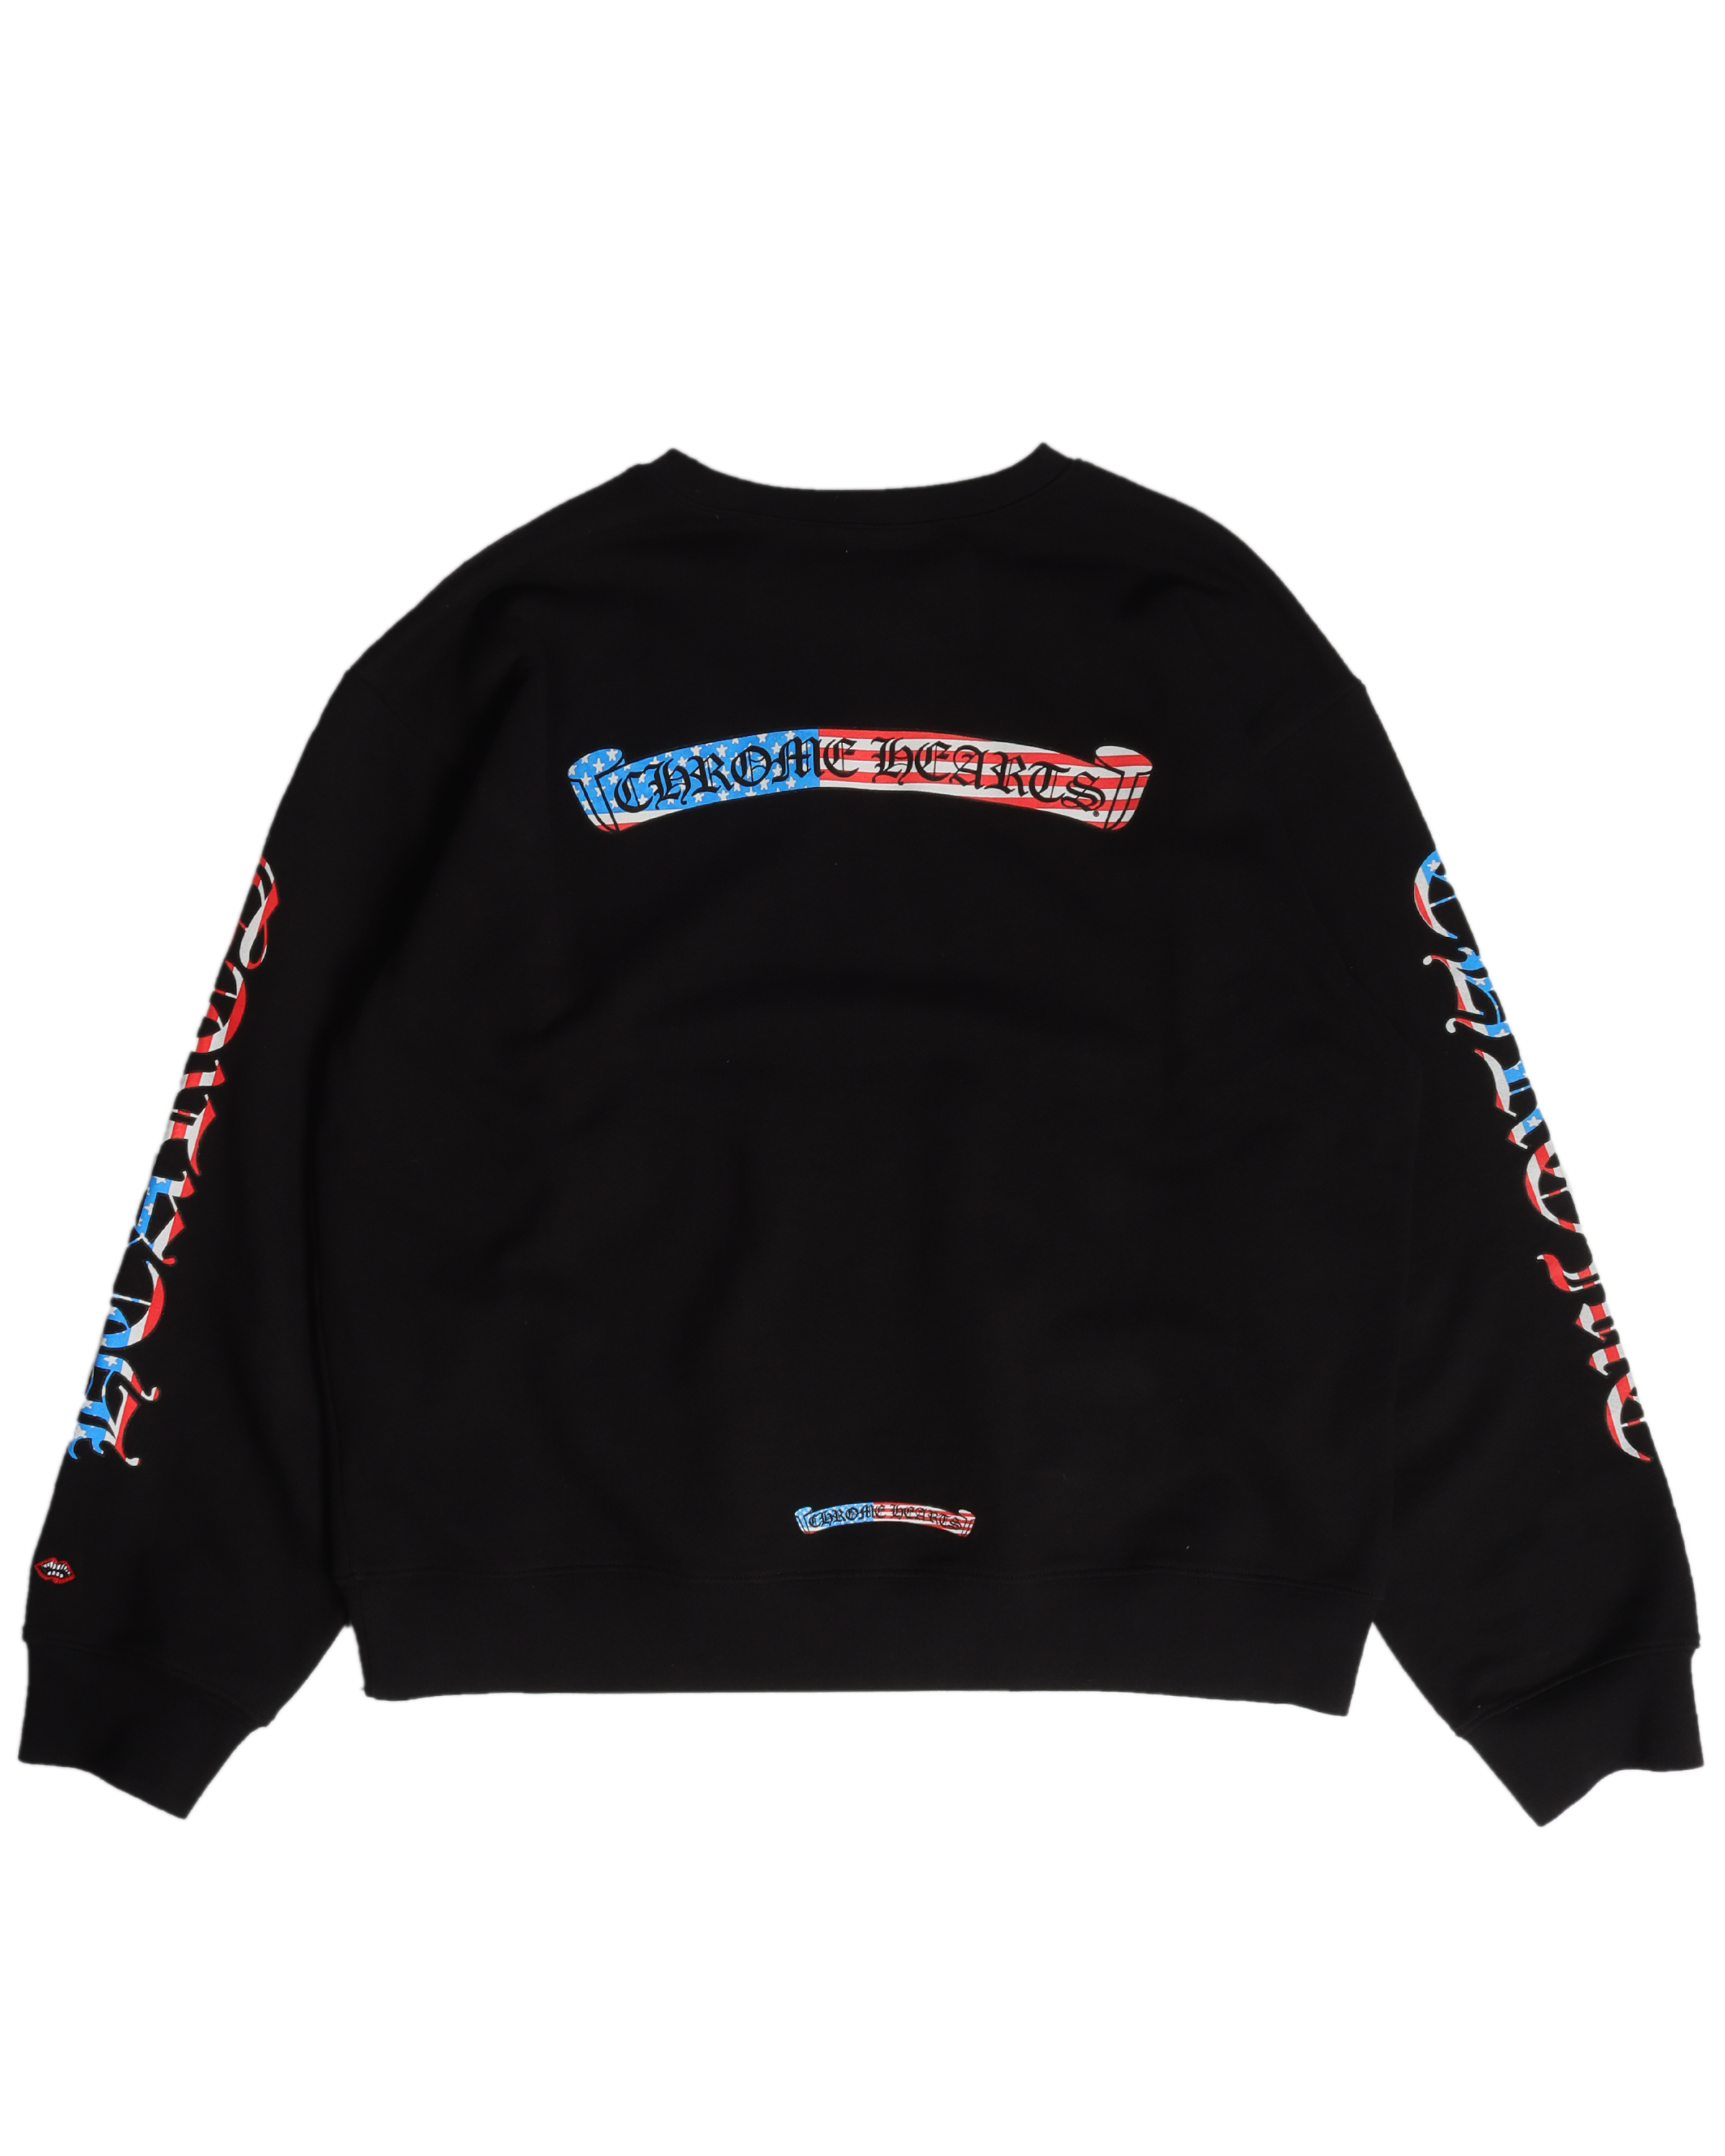 Matty Boy America Crewneck Sweatshirt